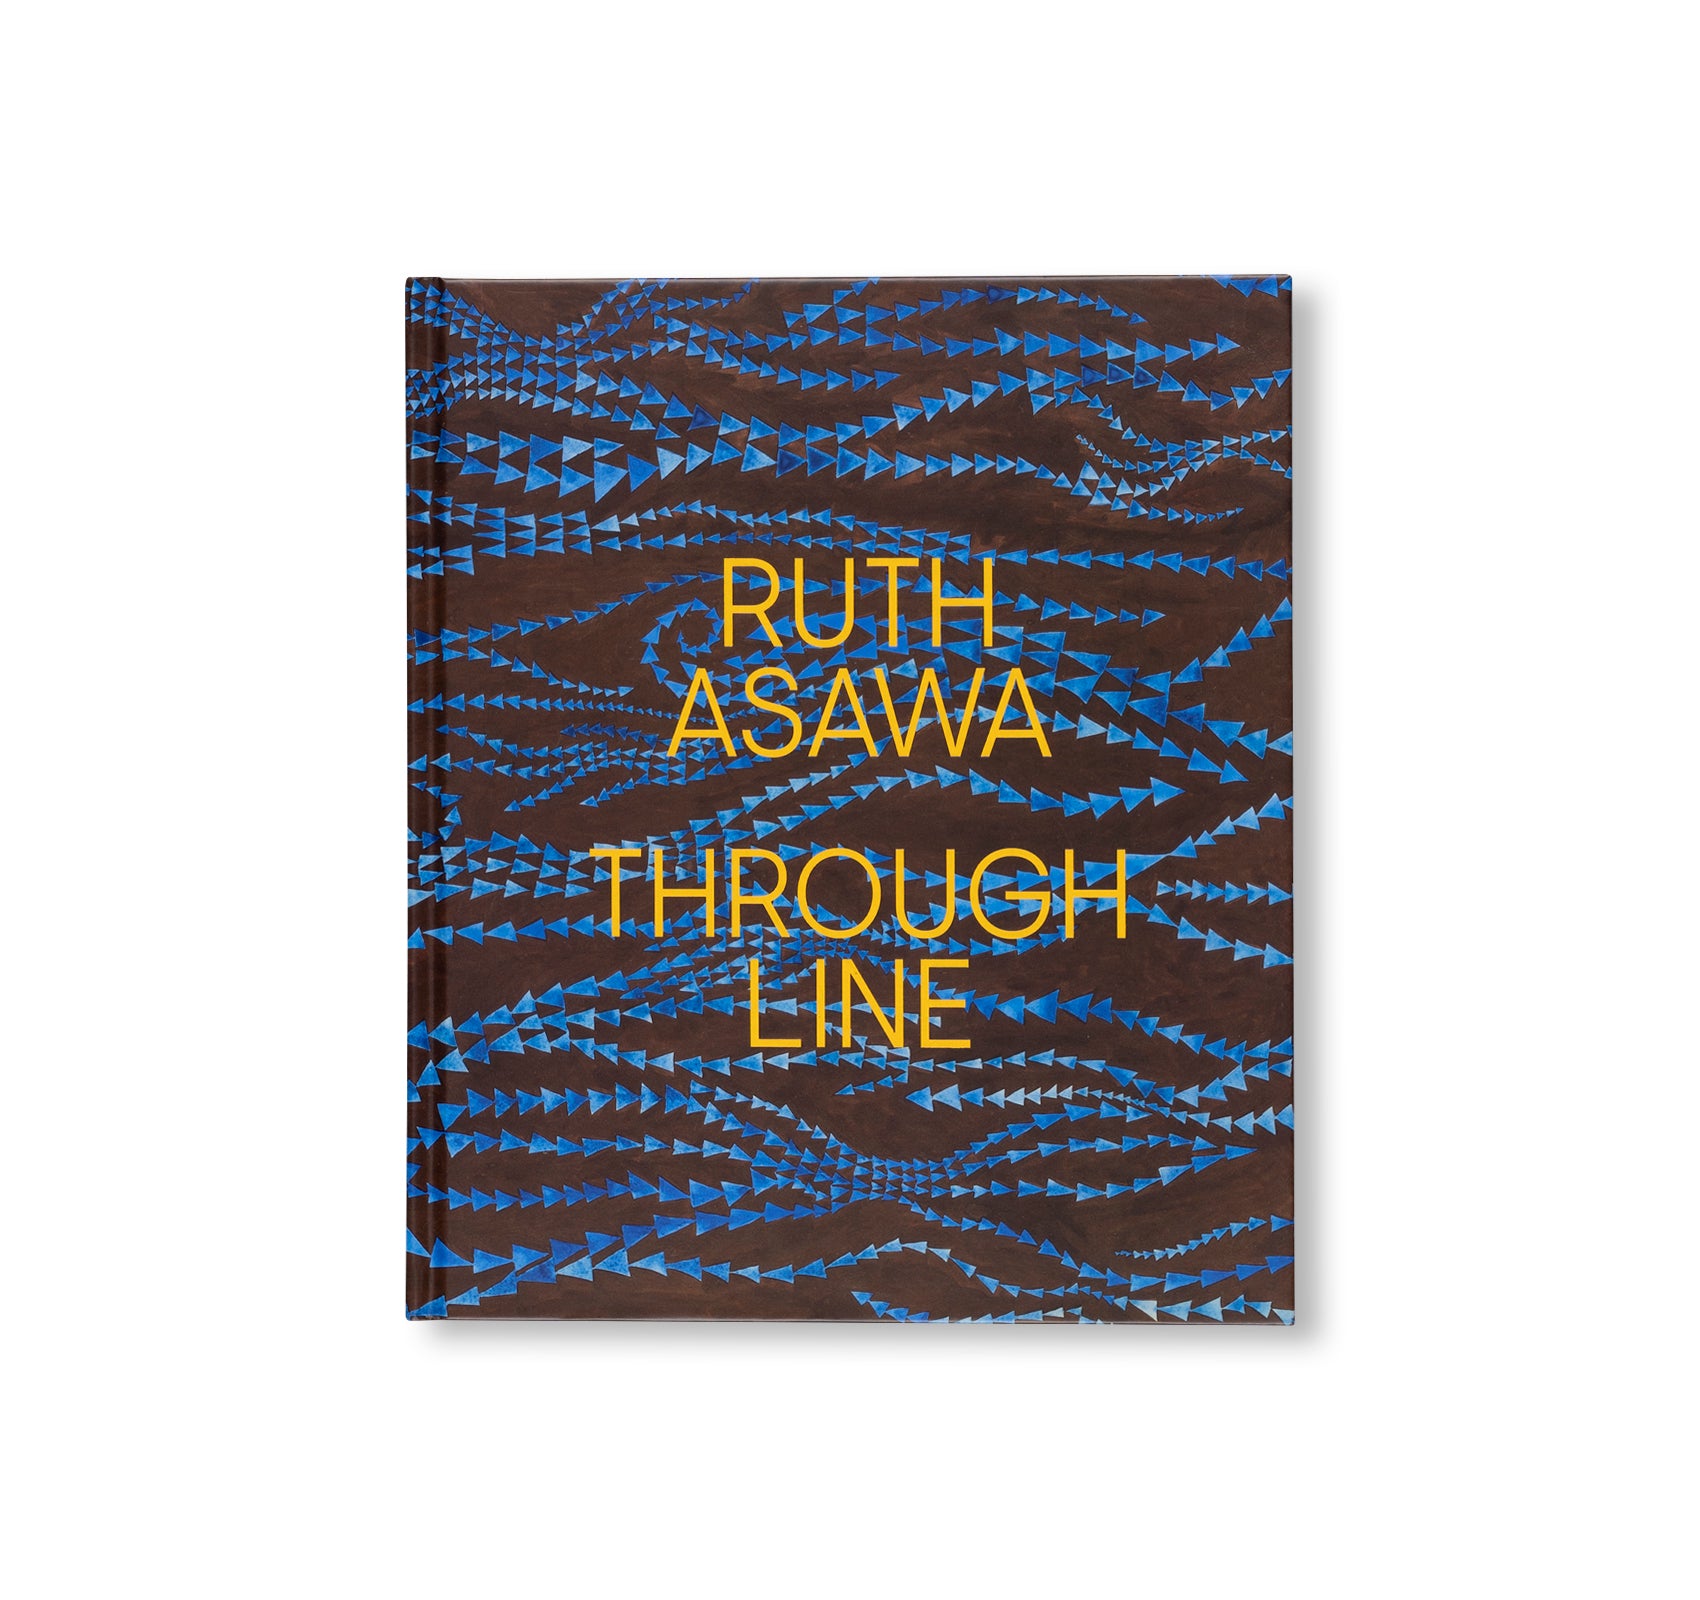 RUTH ASAWA THROUGH LINE by Ruth Asawa